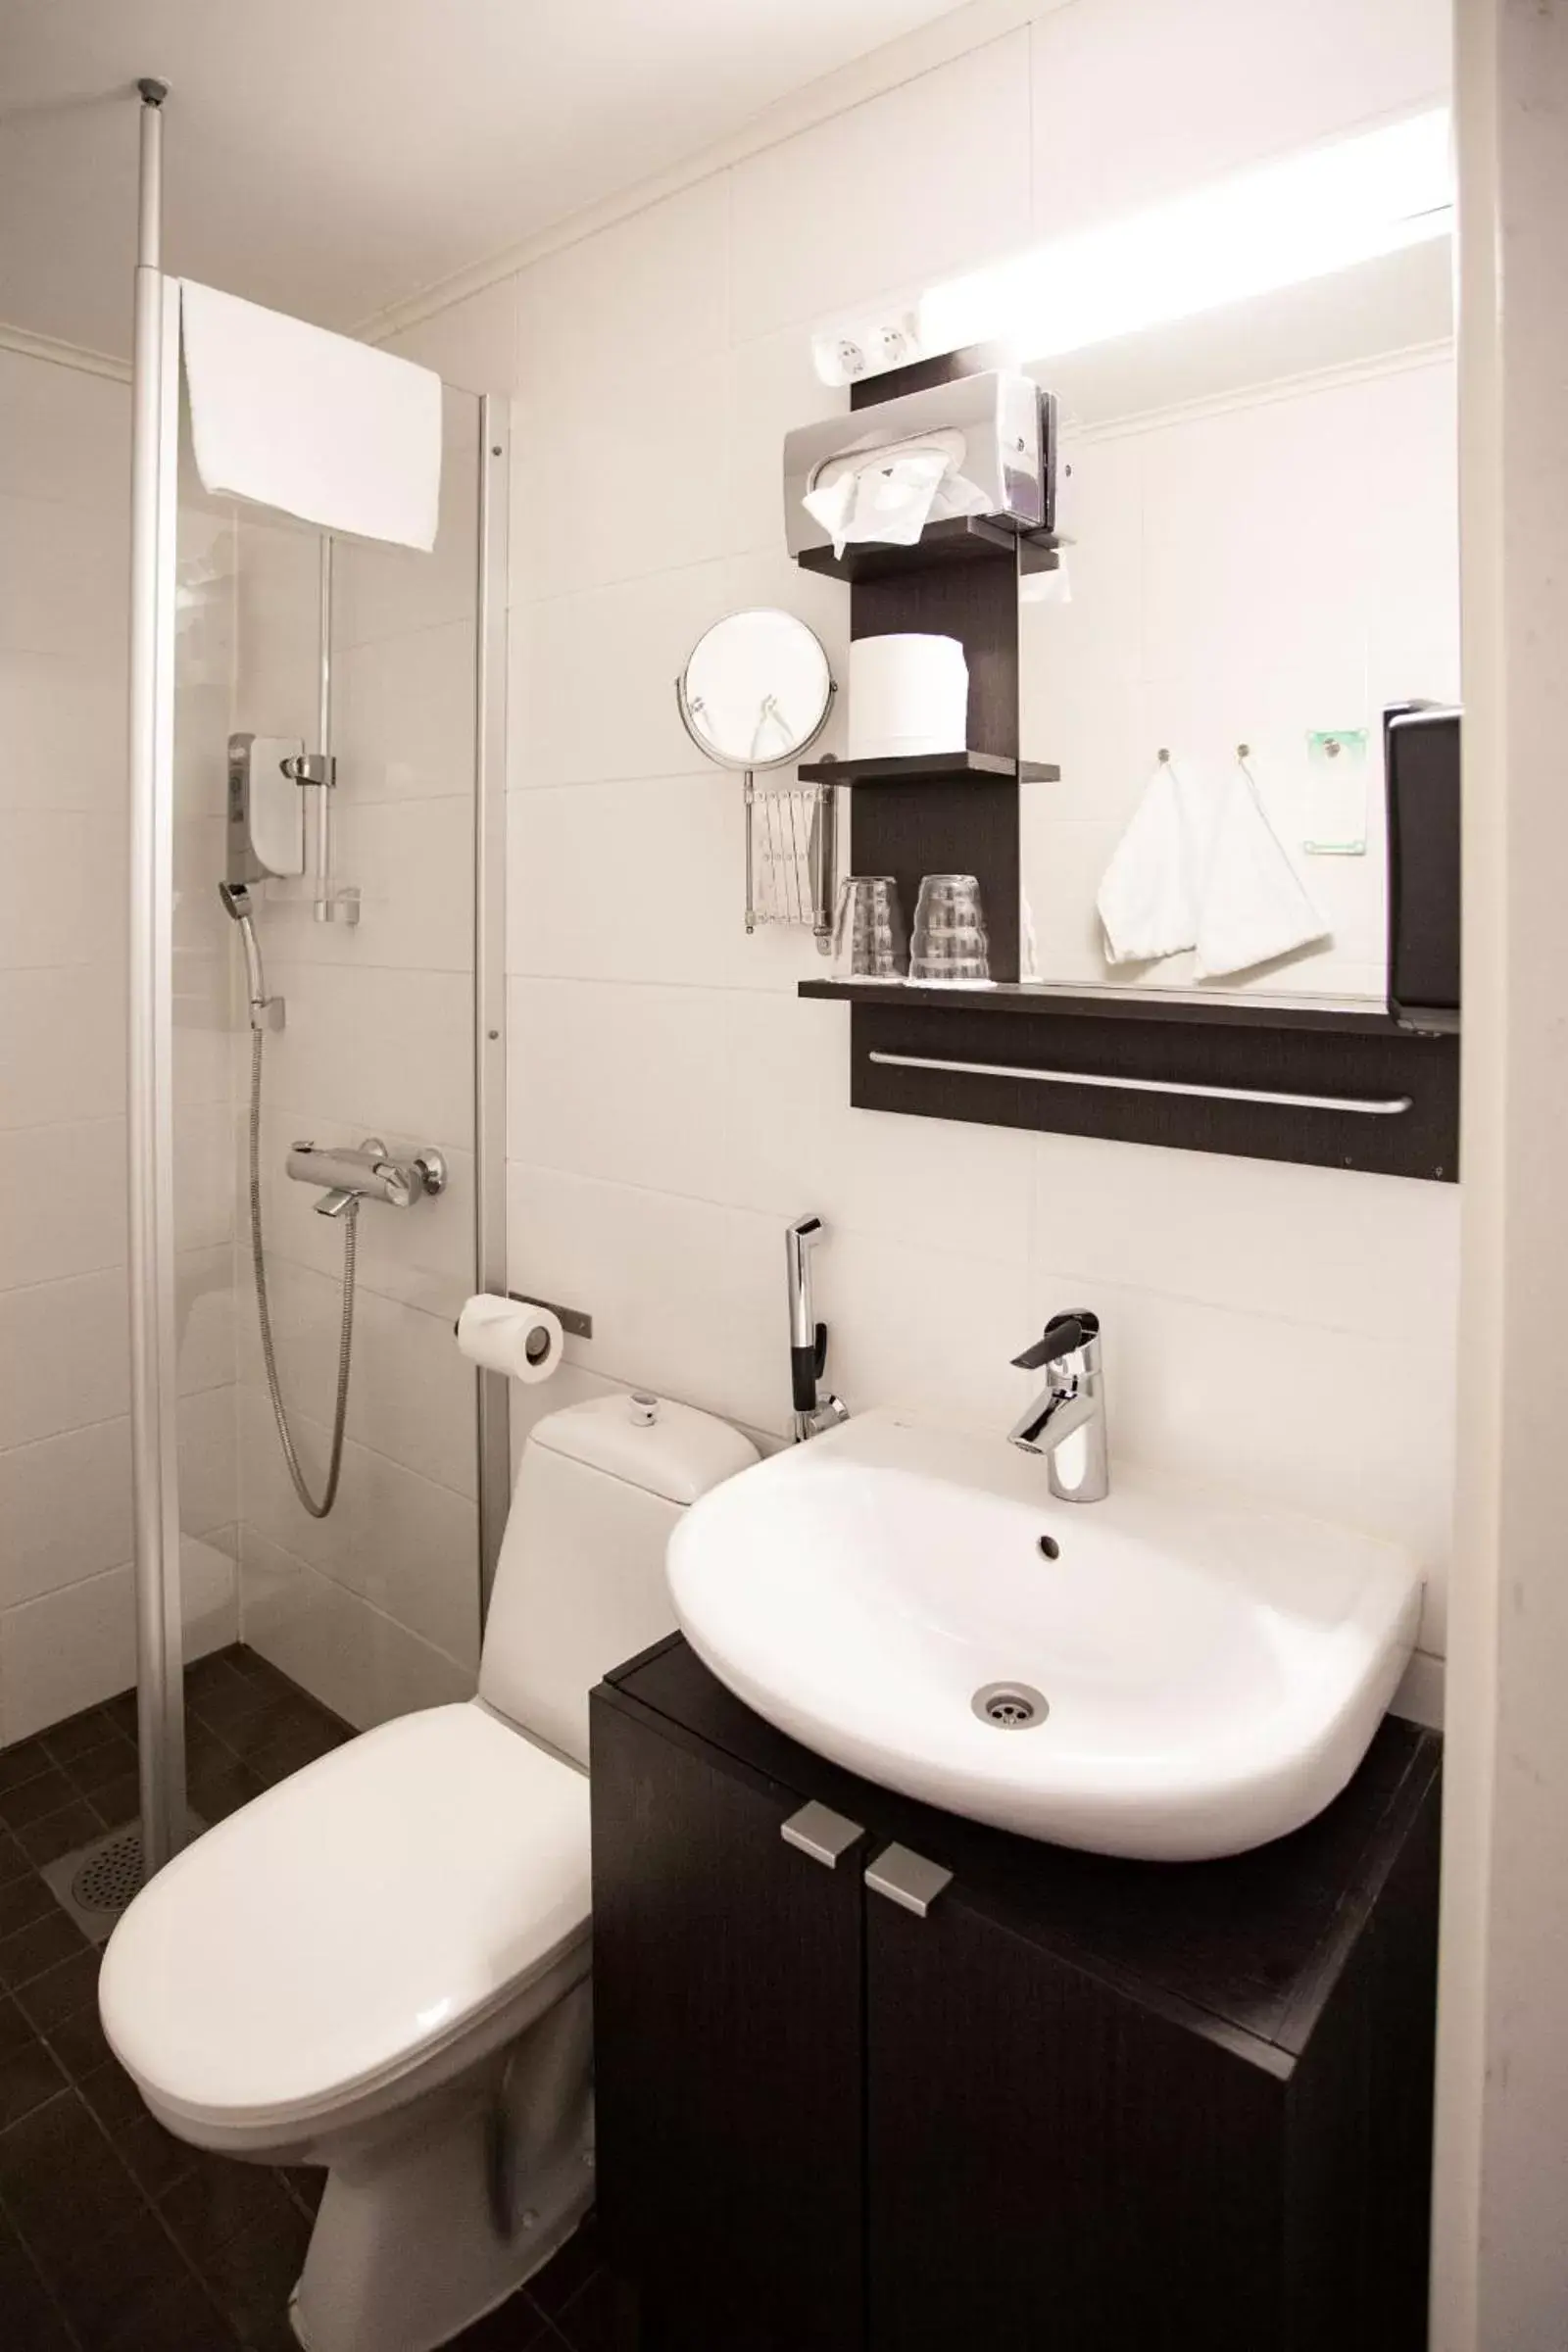 Bathroom in Hotel Vanha Rauma